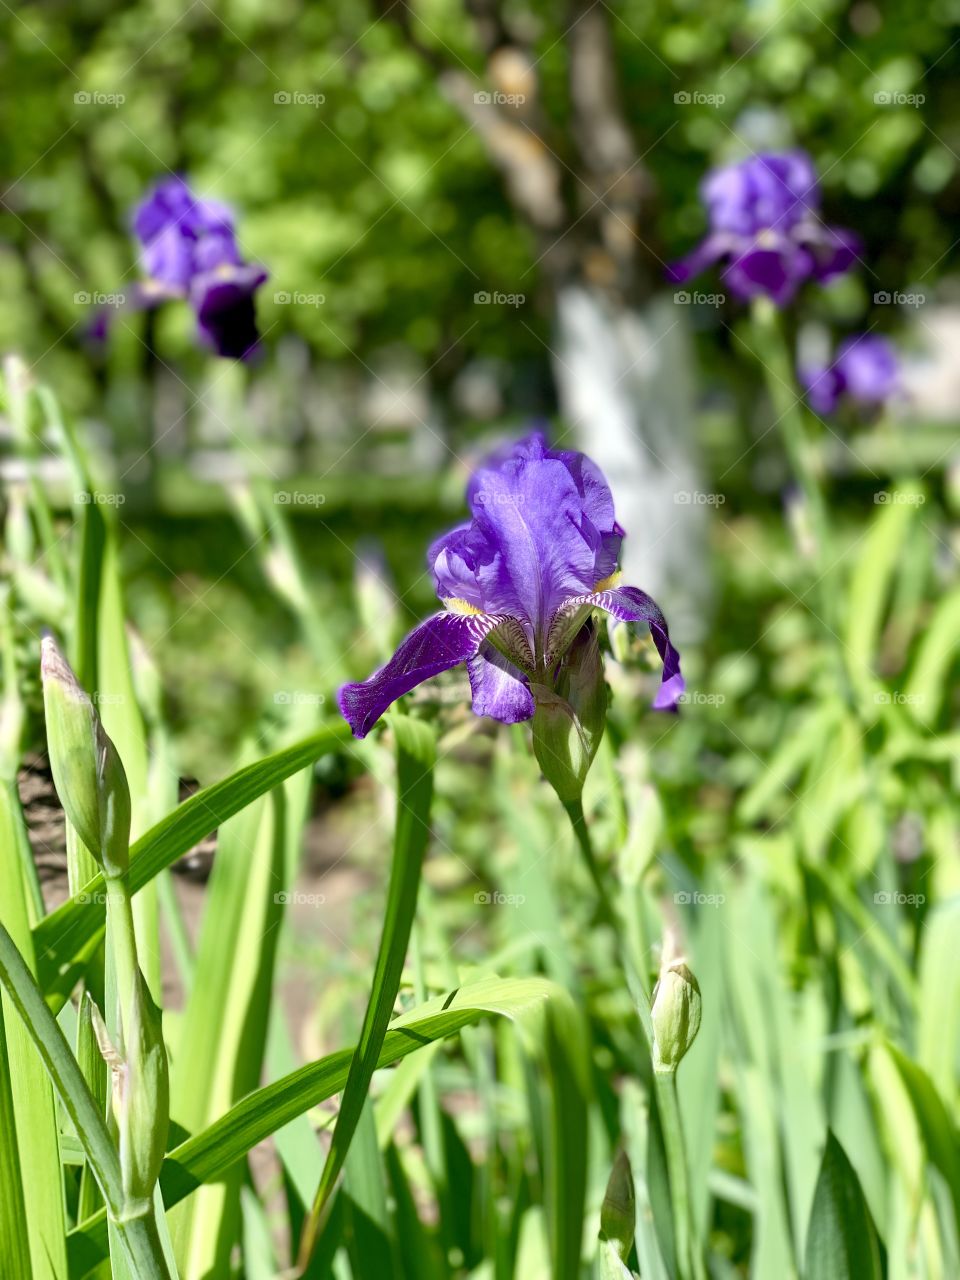 purple irises in a flowerbed